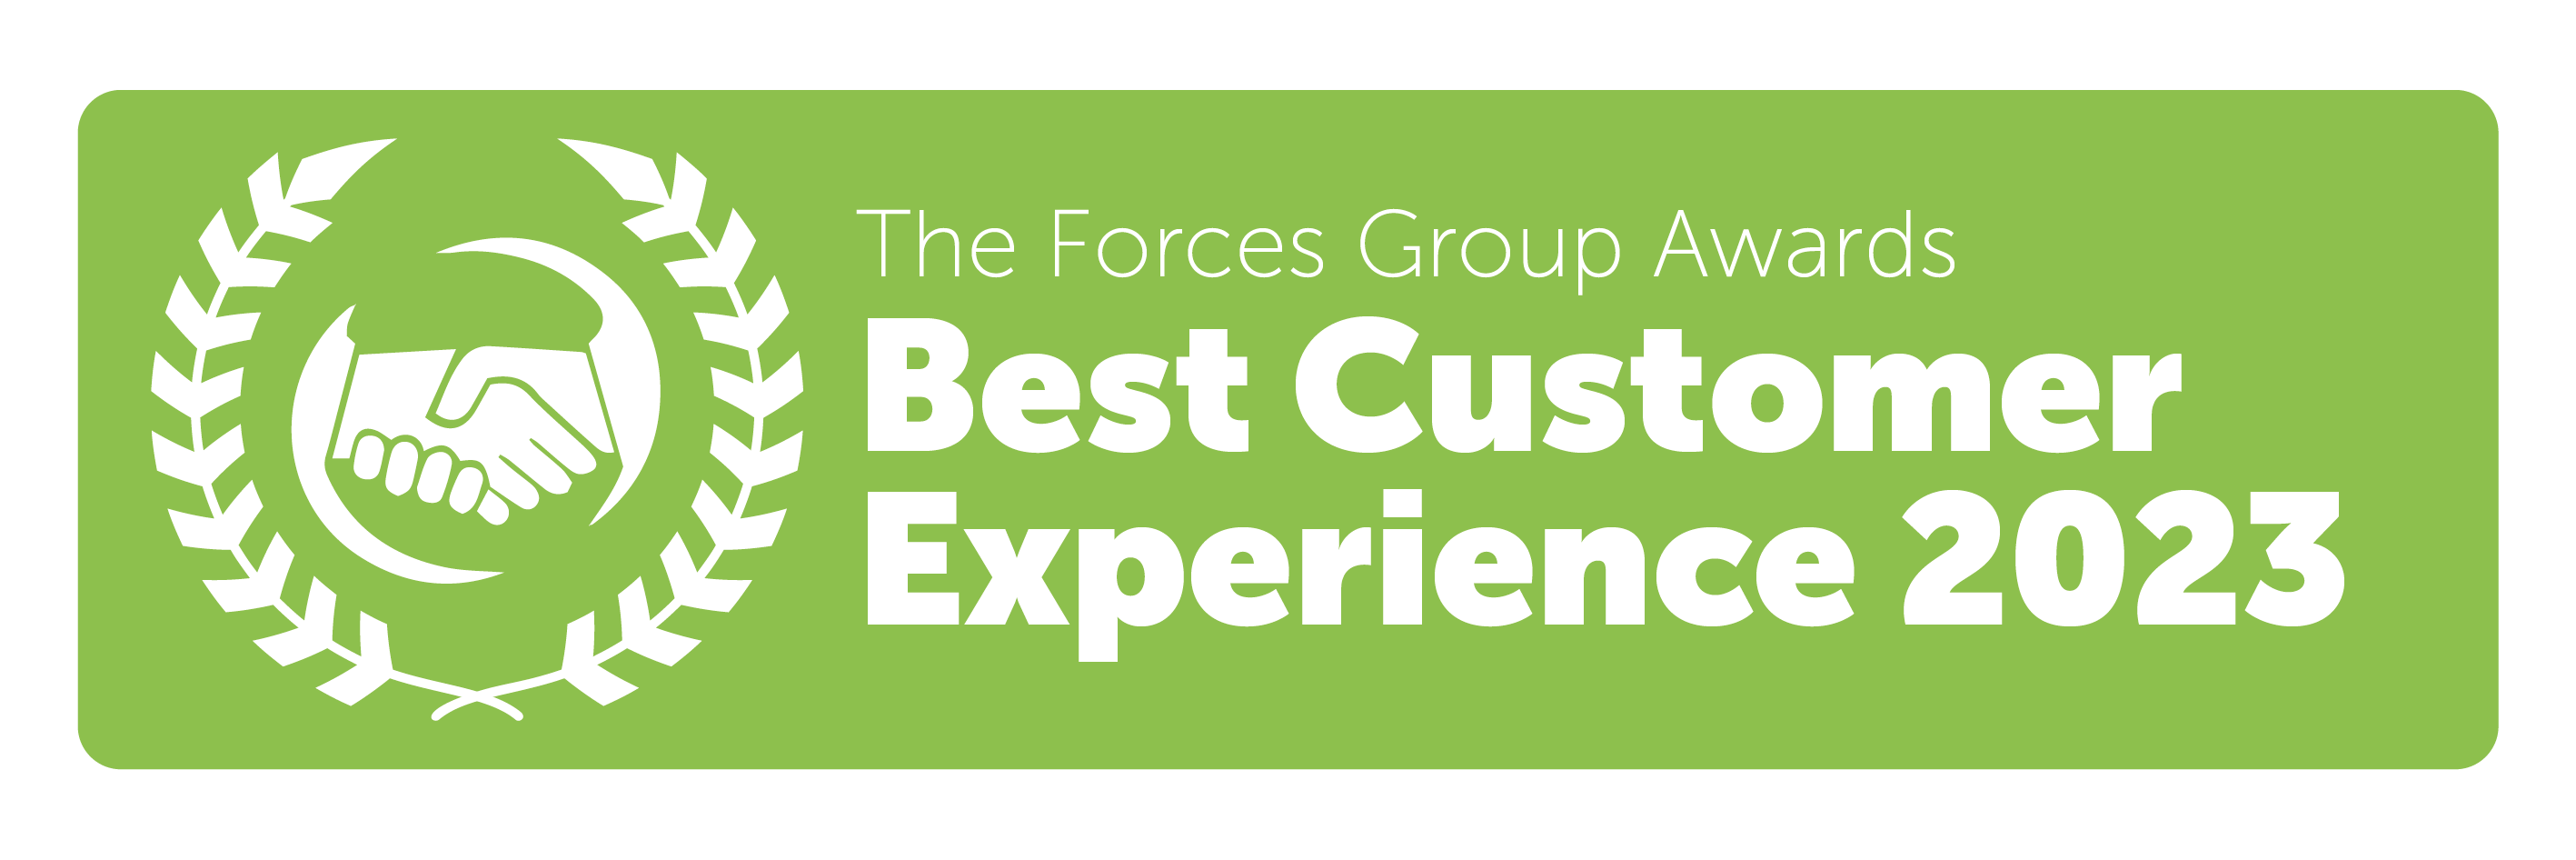 Locksmith Awarded Best Customer Experience 2023